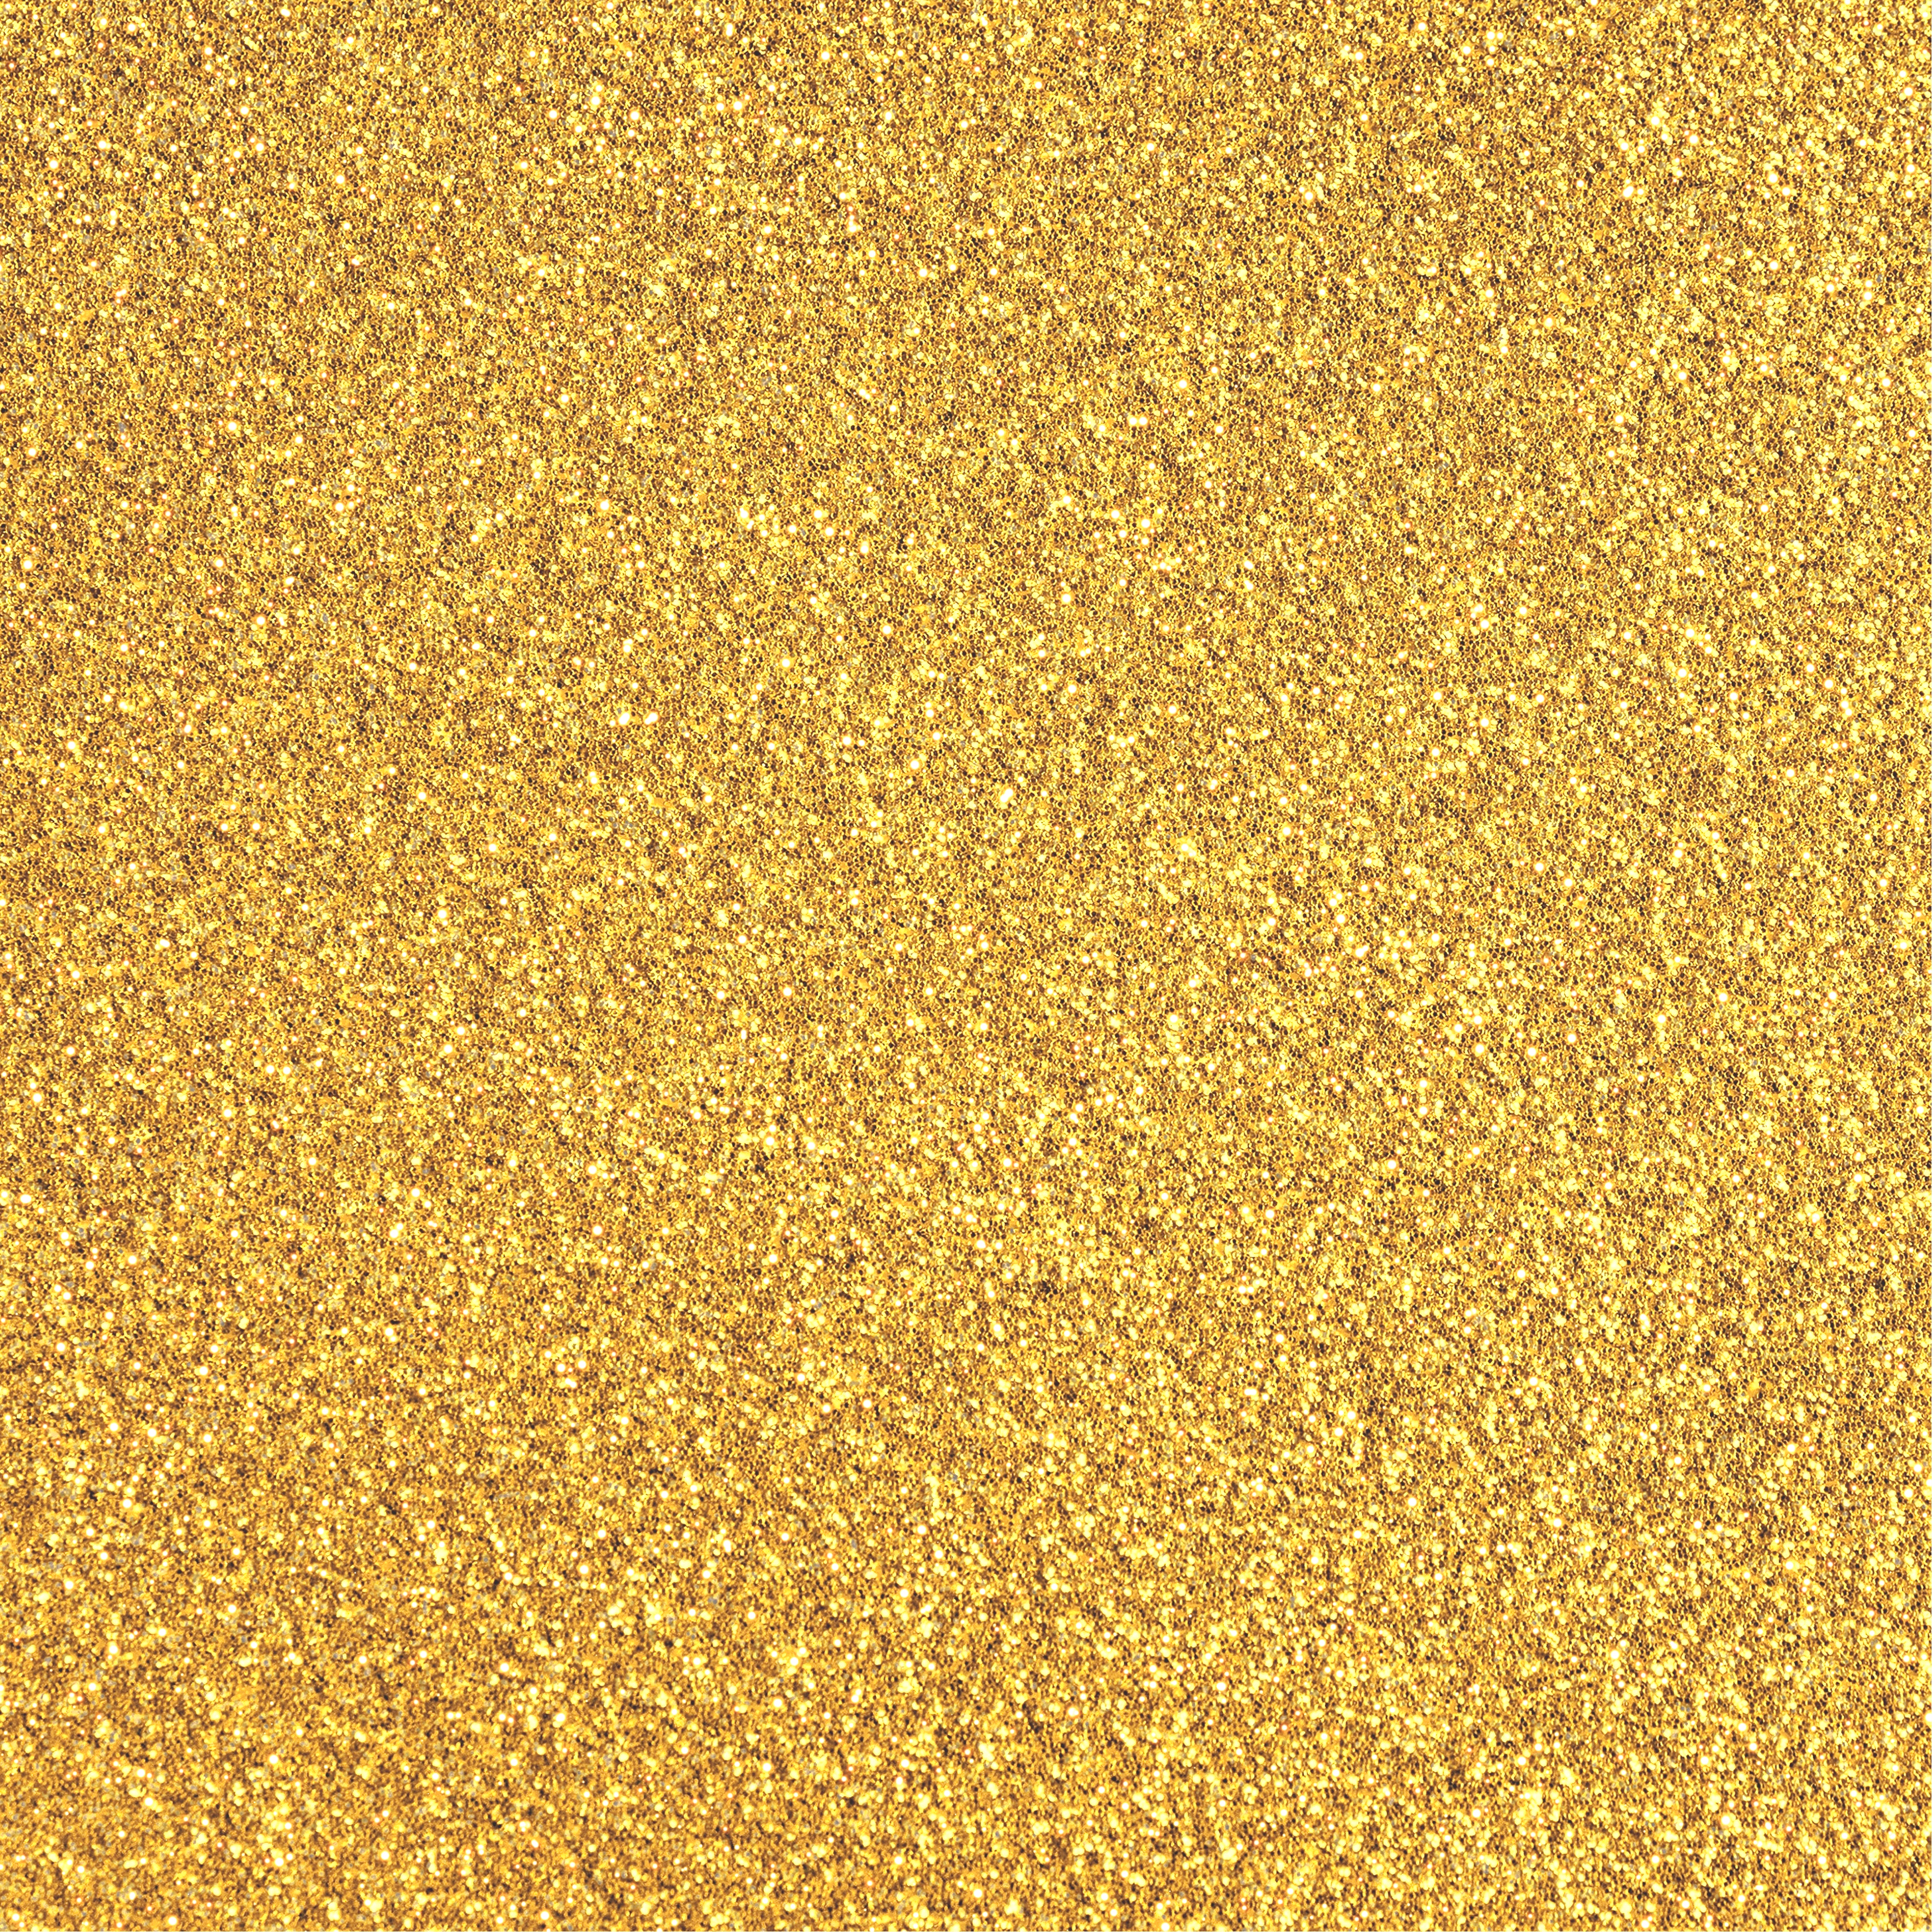 200+] Gold Glitter Backgrounds